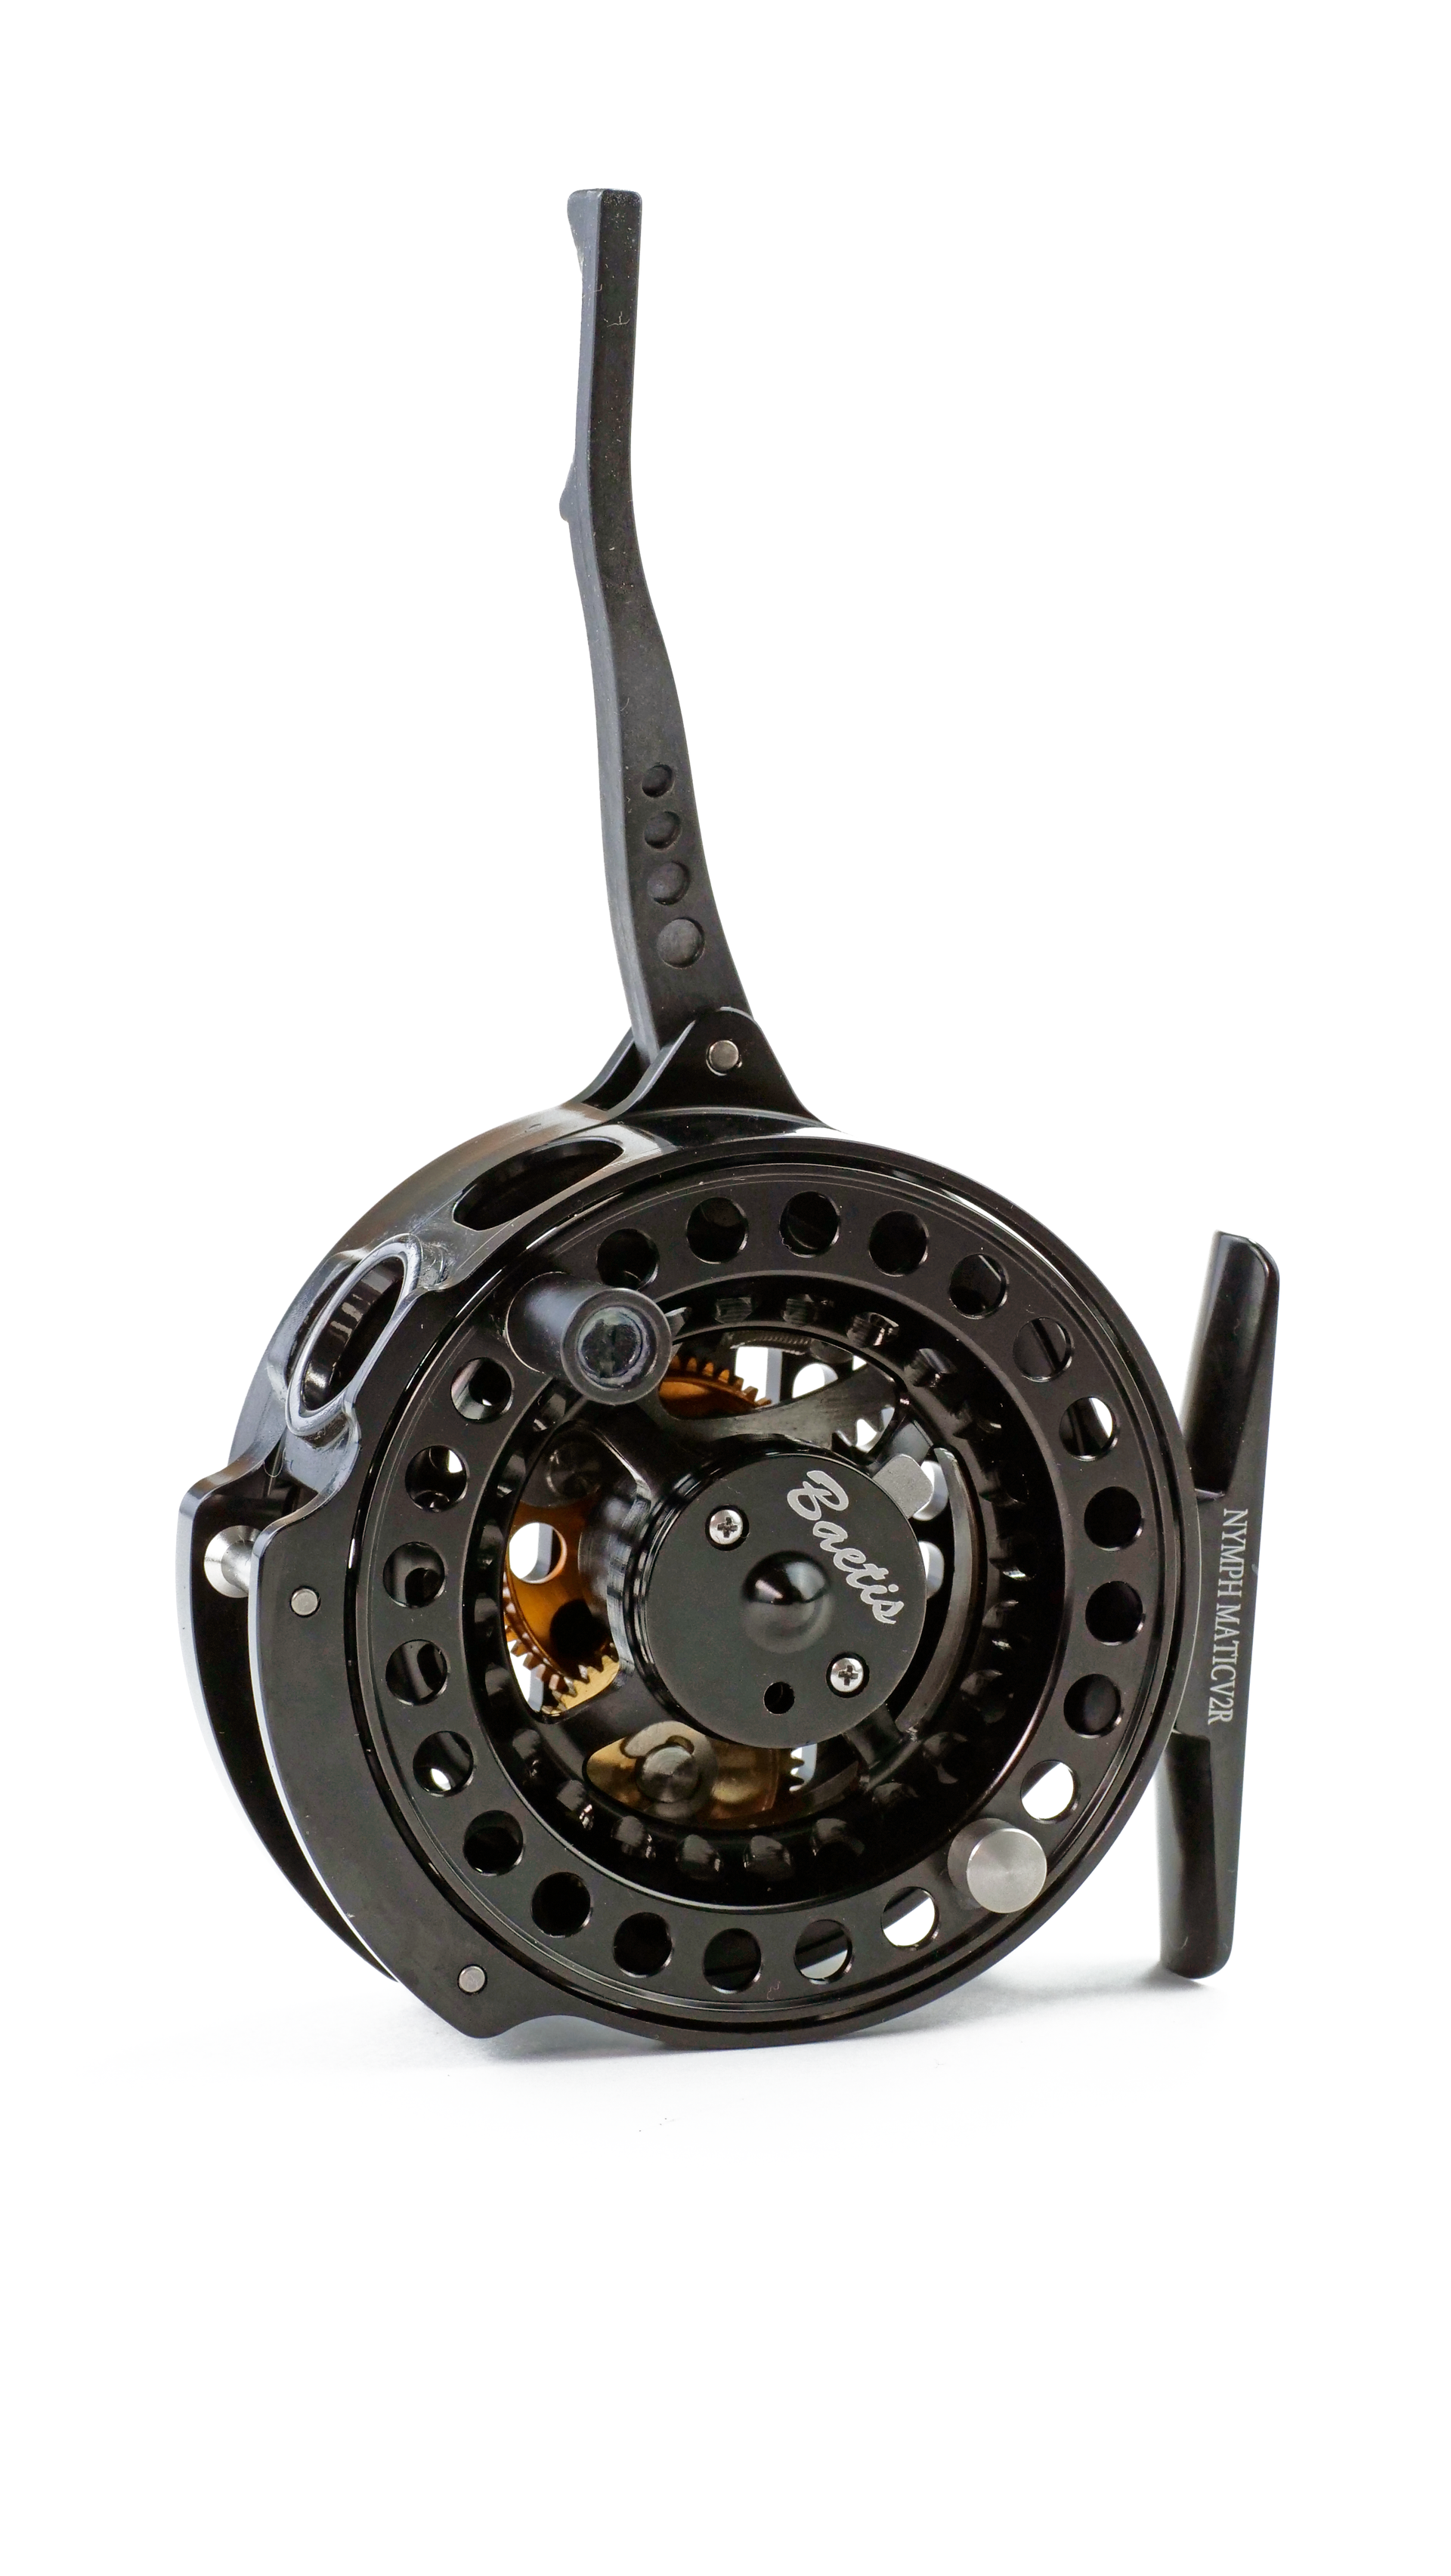 Baetis Fly Fishing NymphMatic Semi Automatic Reel 2.0 – Tactical